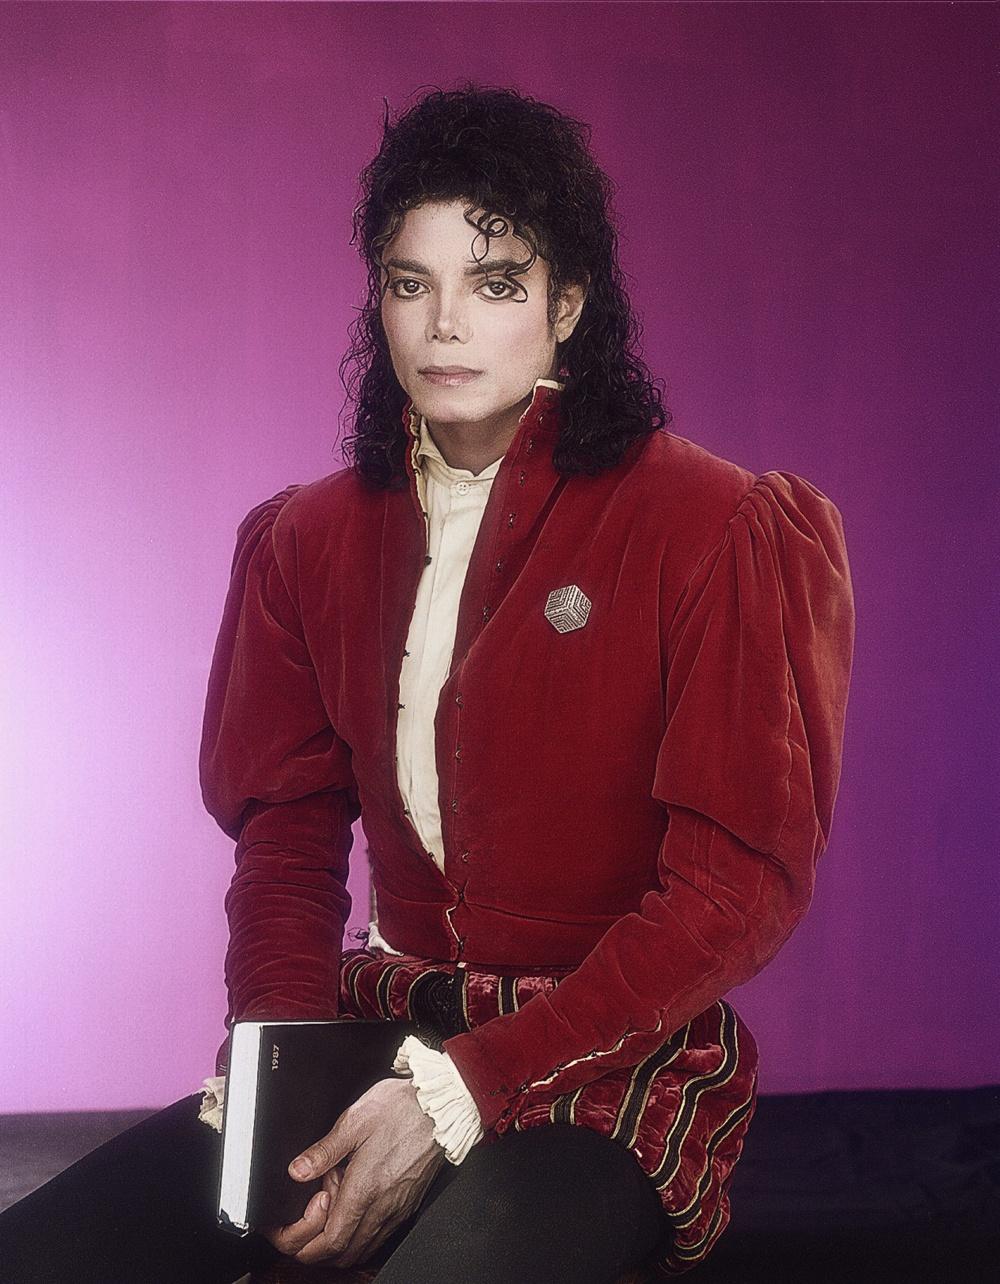 Photo №3747 Michael Jackson.